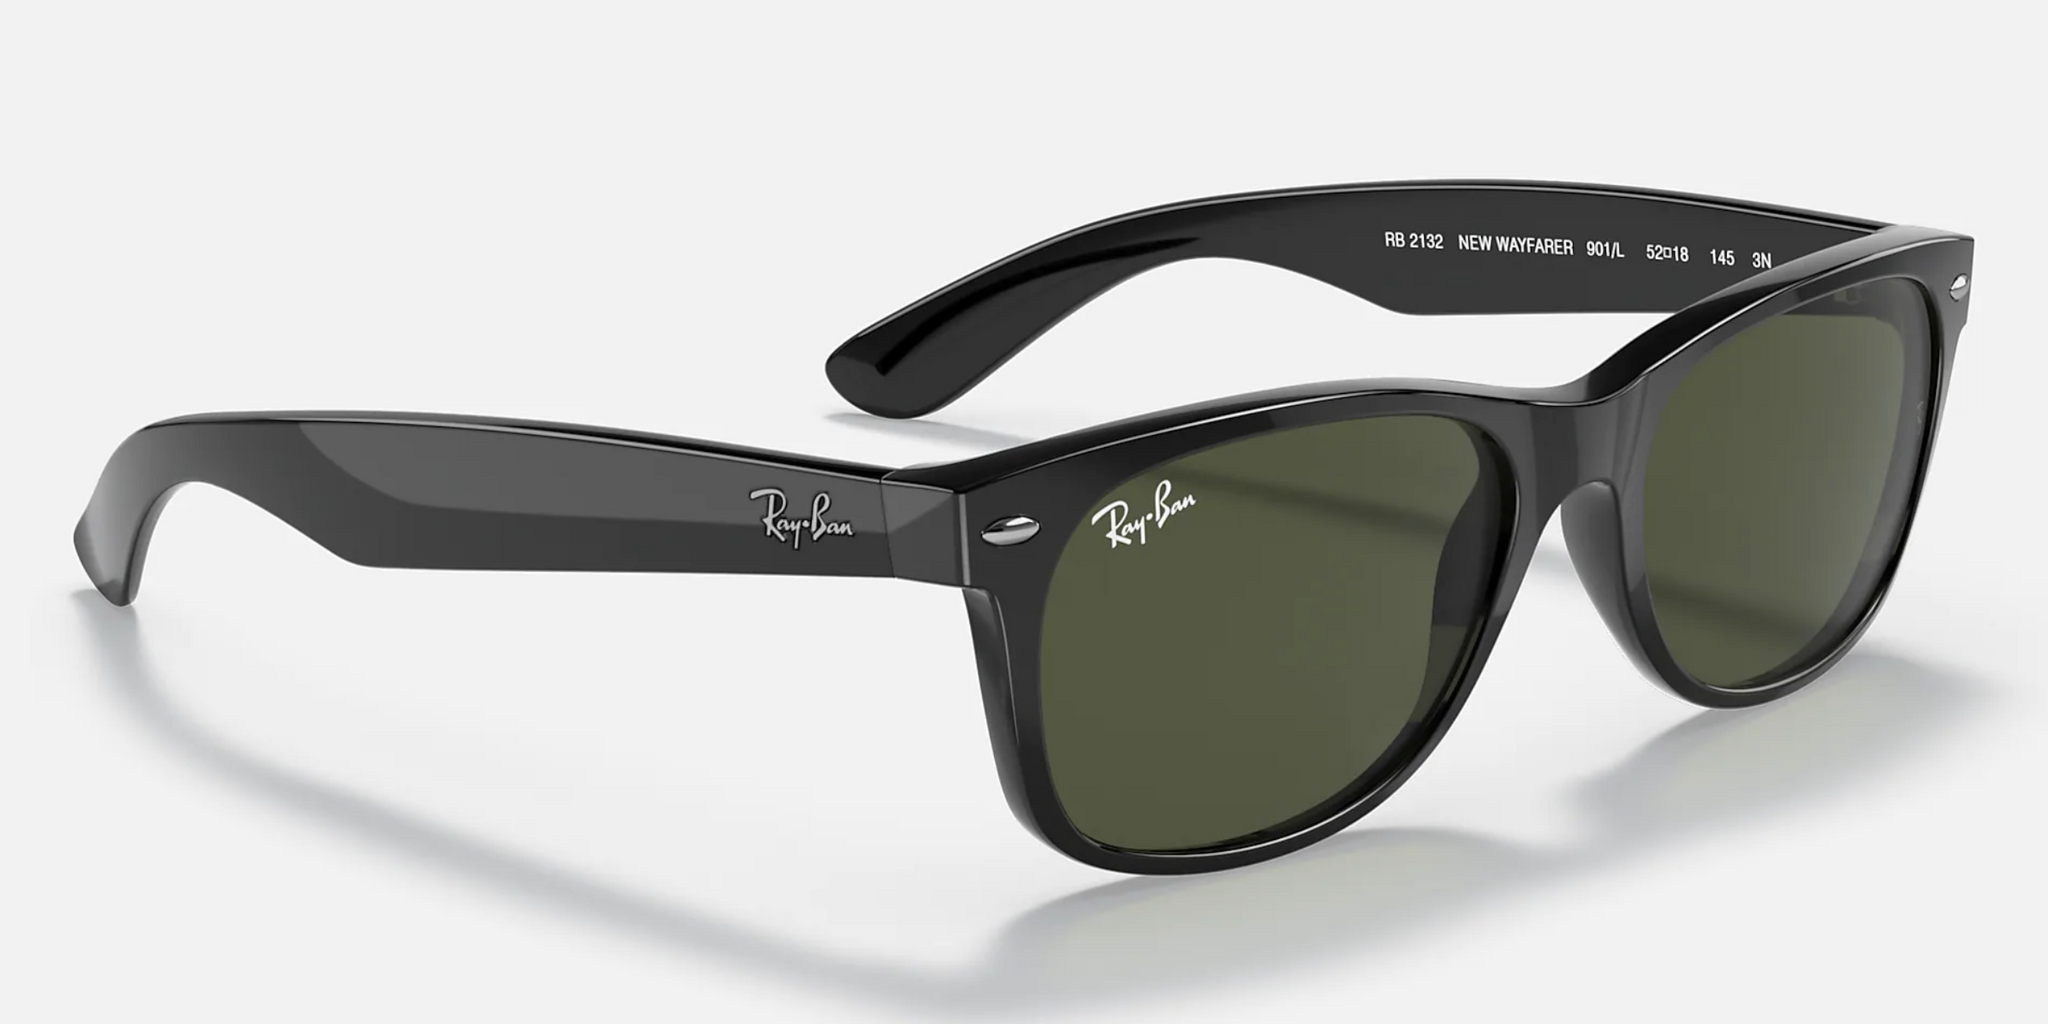 Ray-Ban New Wayfarer Black Sunglasses RB2132 - Flight Sunglasses